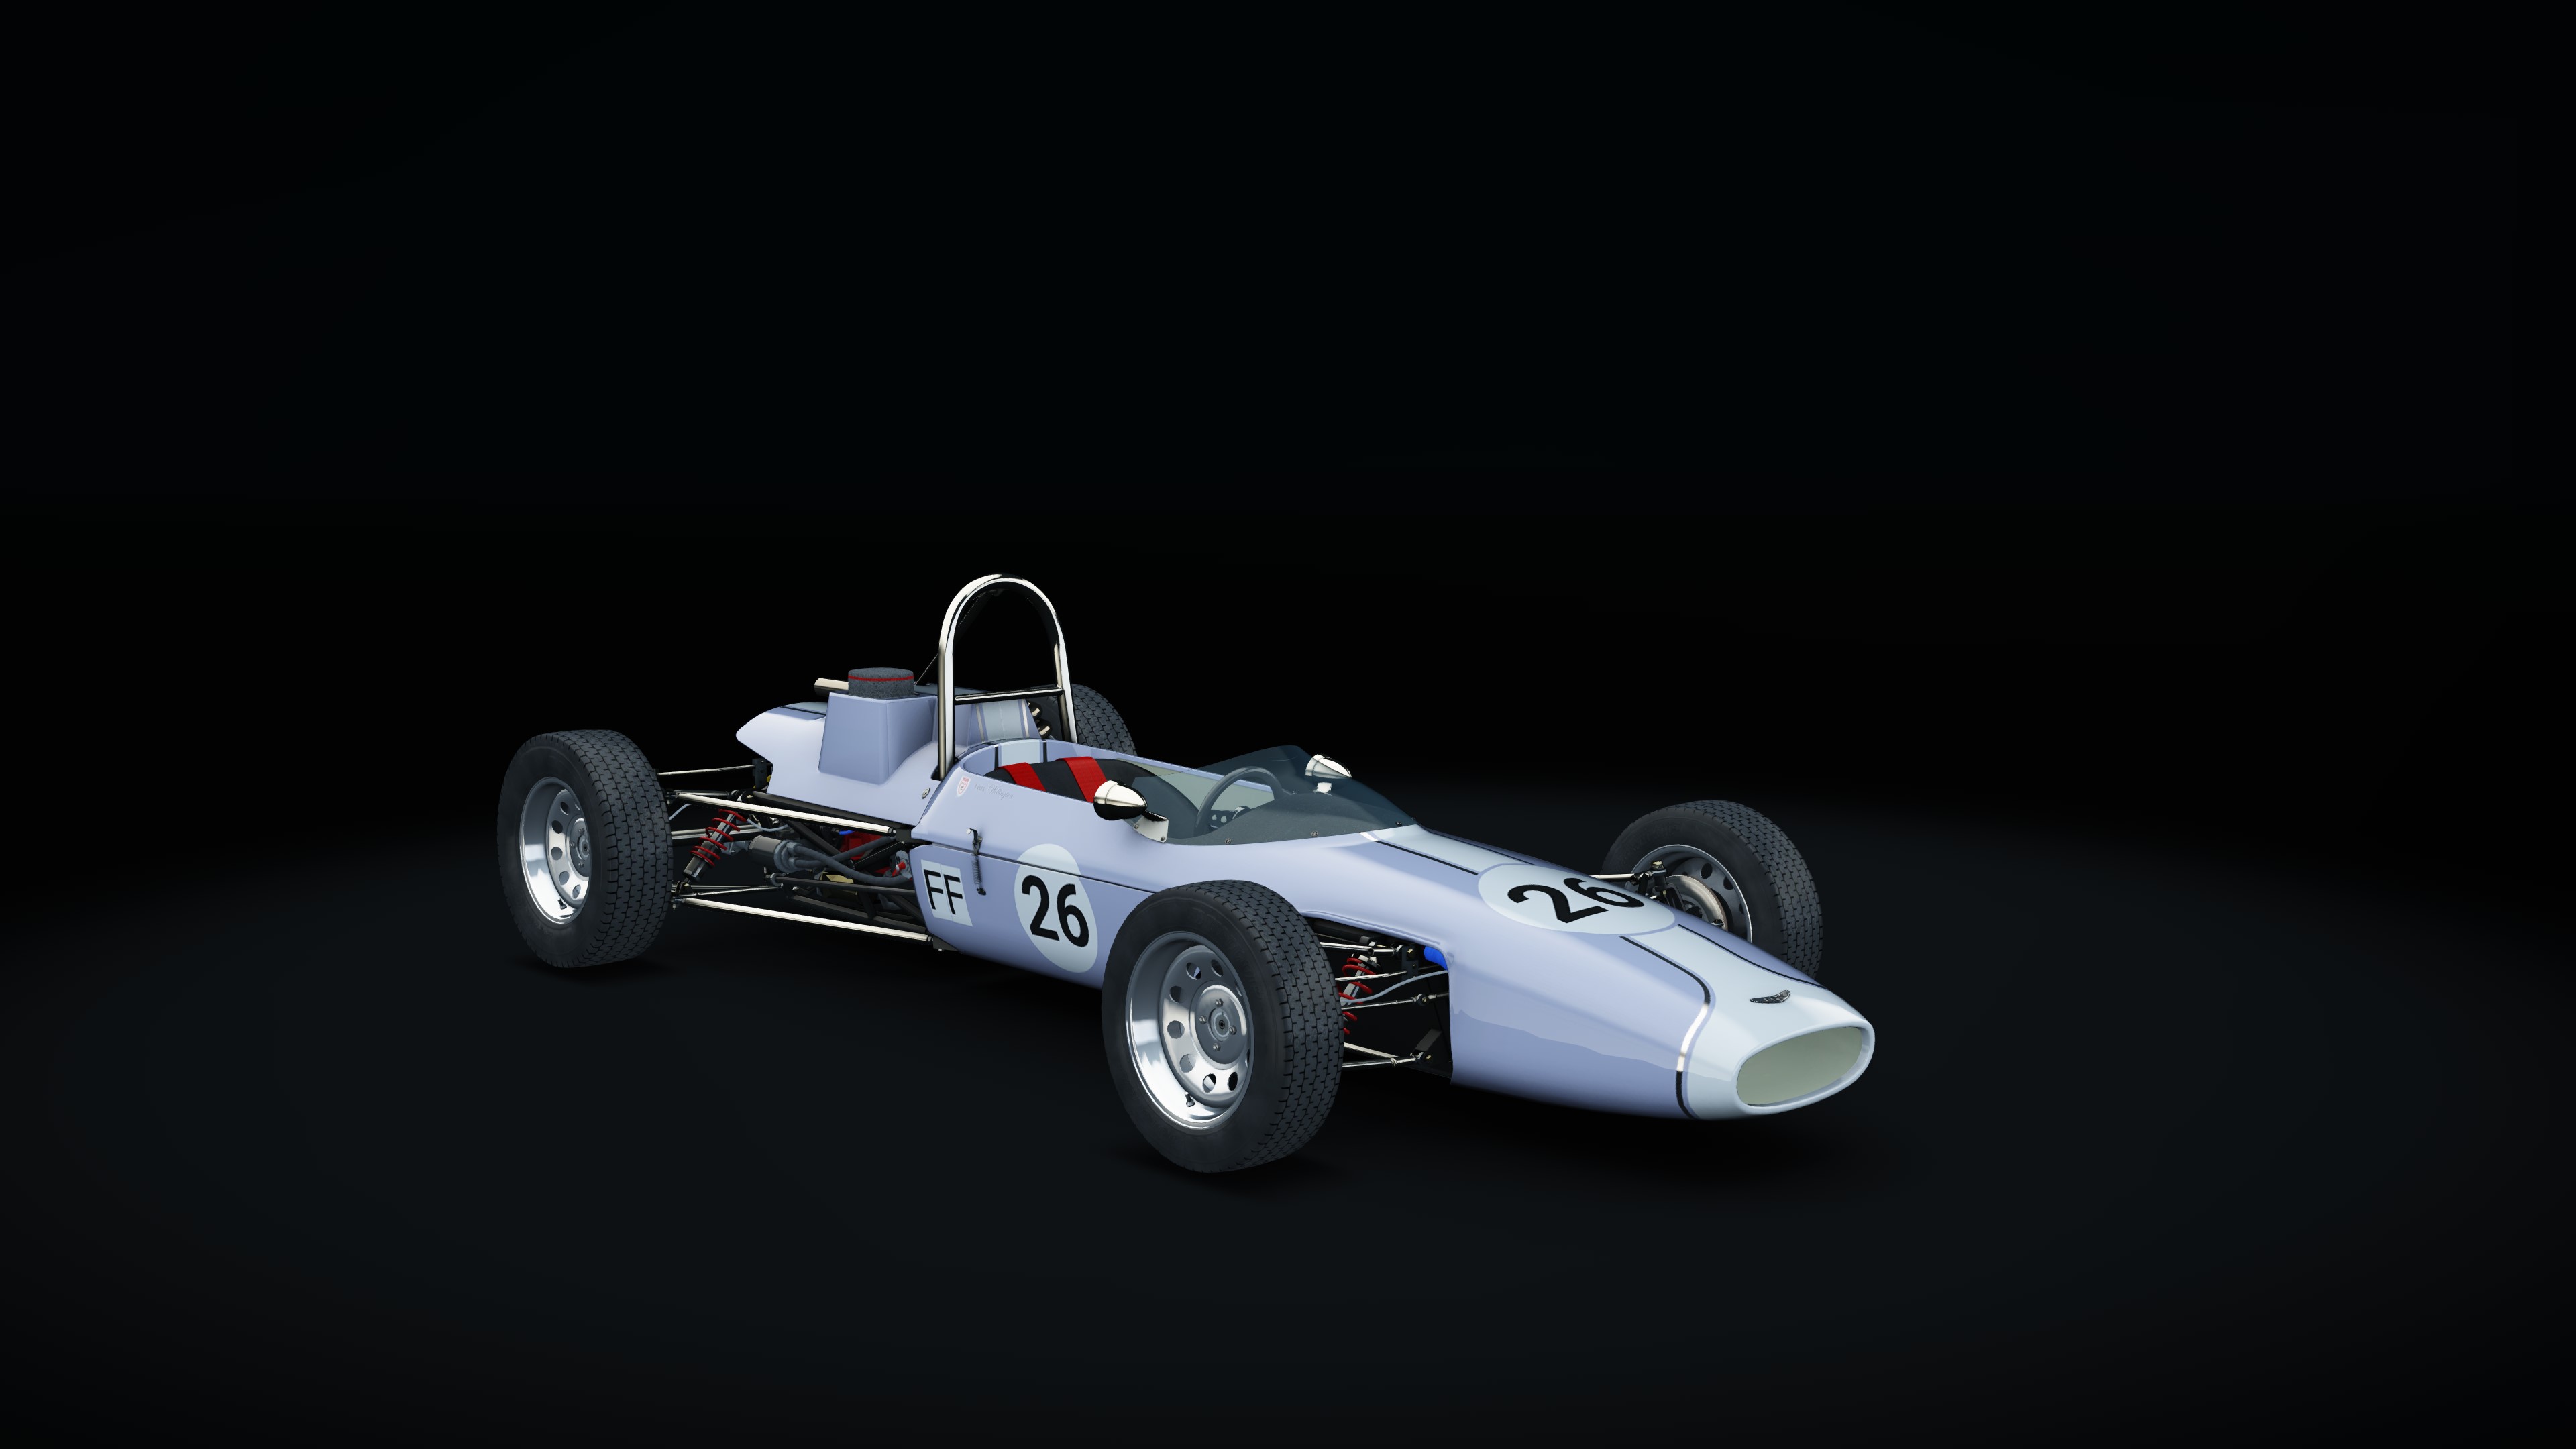 Russell-Alexis Mk. 14 Formula Ford, skin 26NWellington